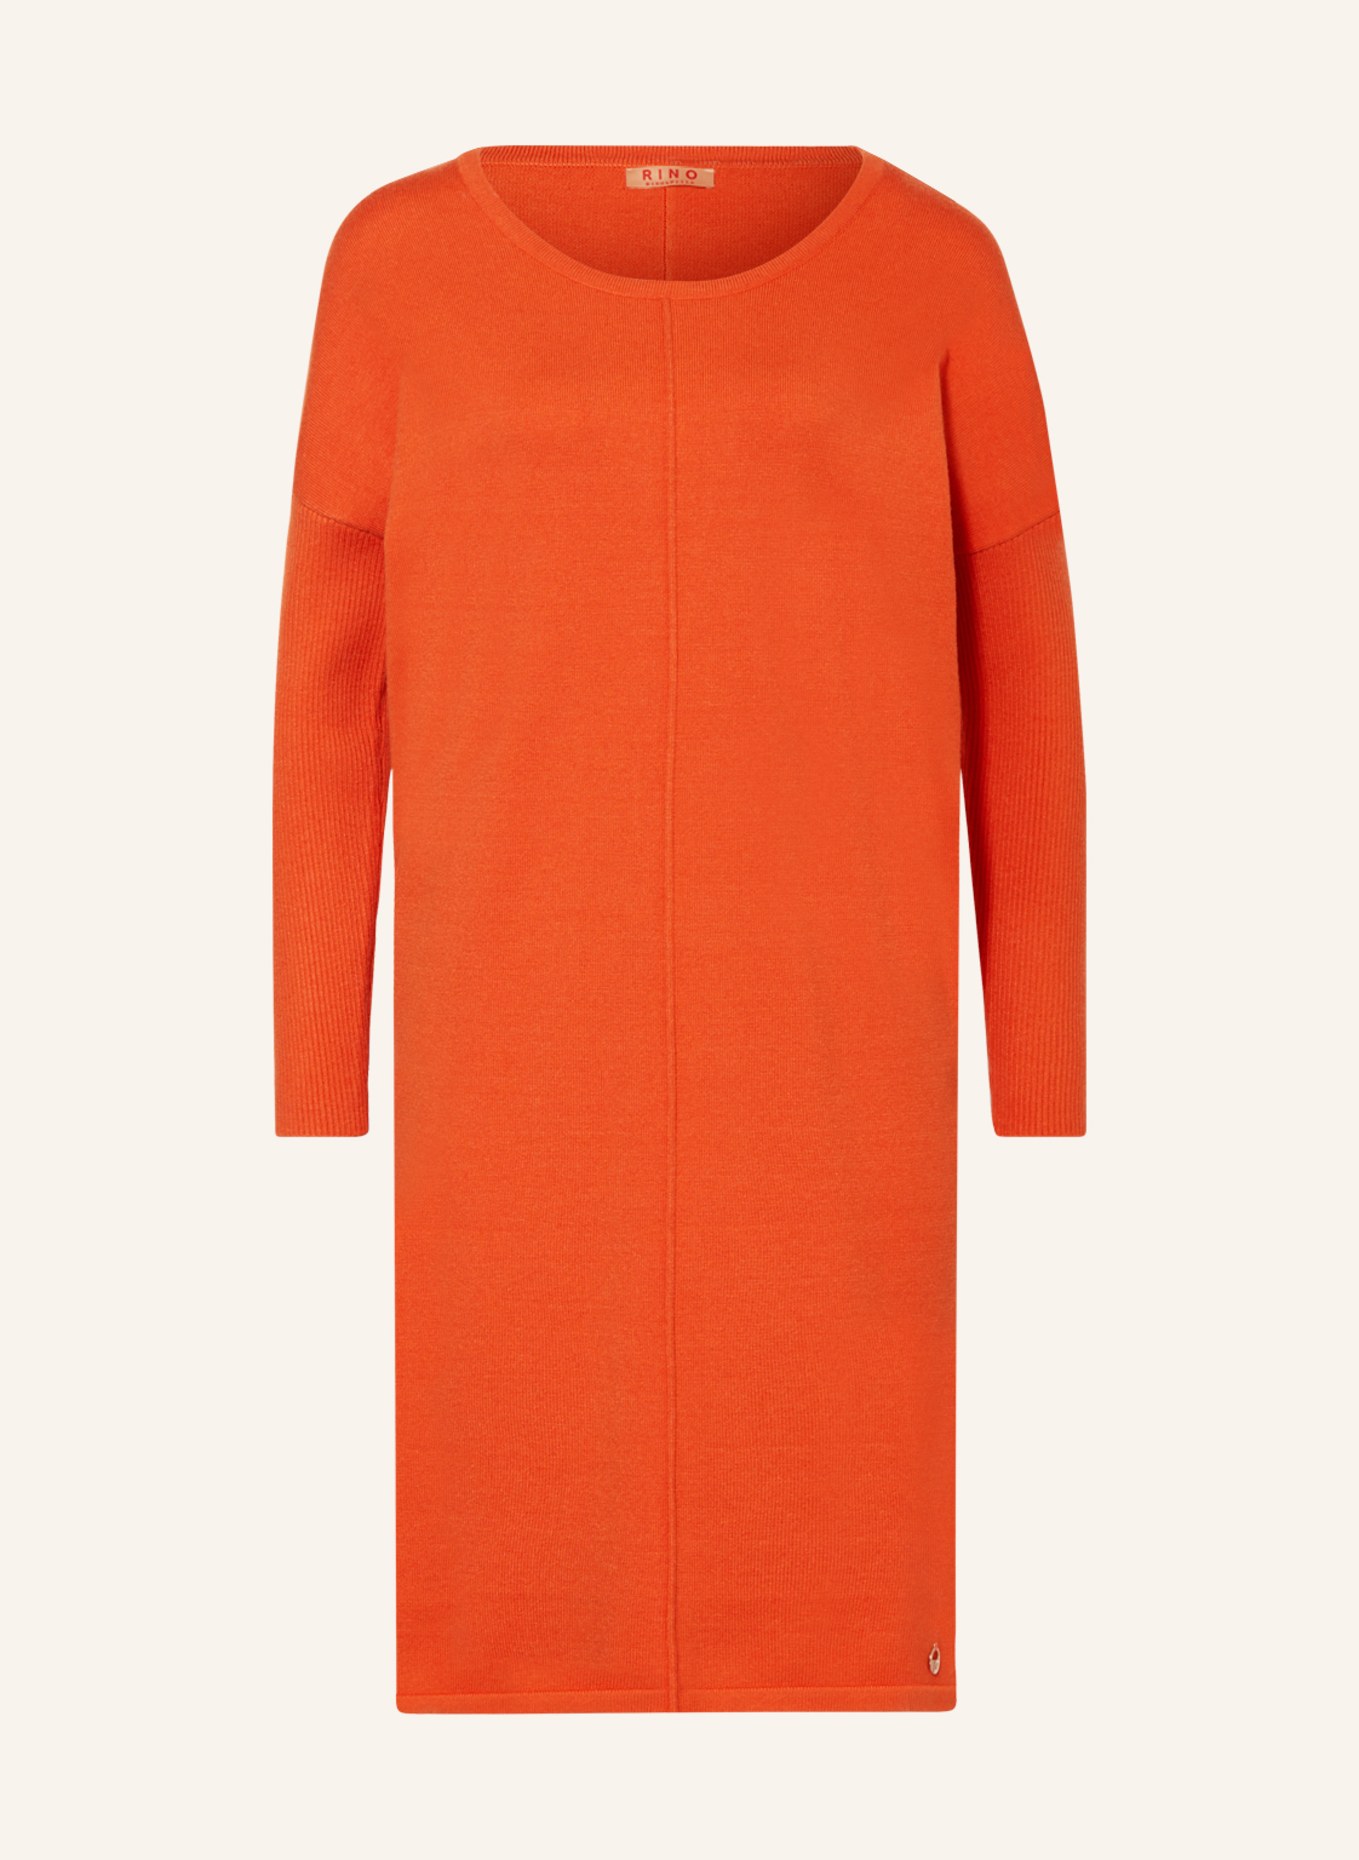 Платье RINO & PELLE KIRA, оранжевый